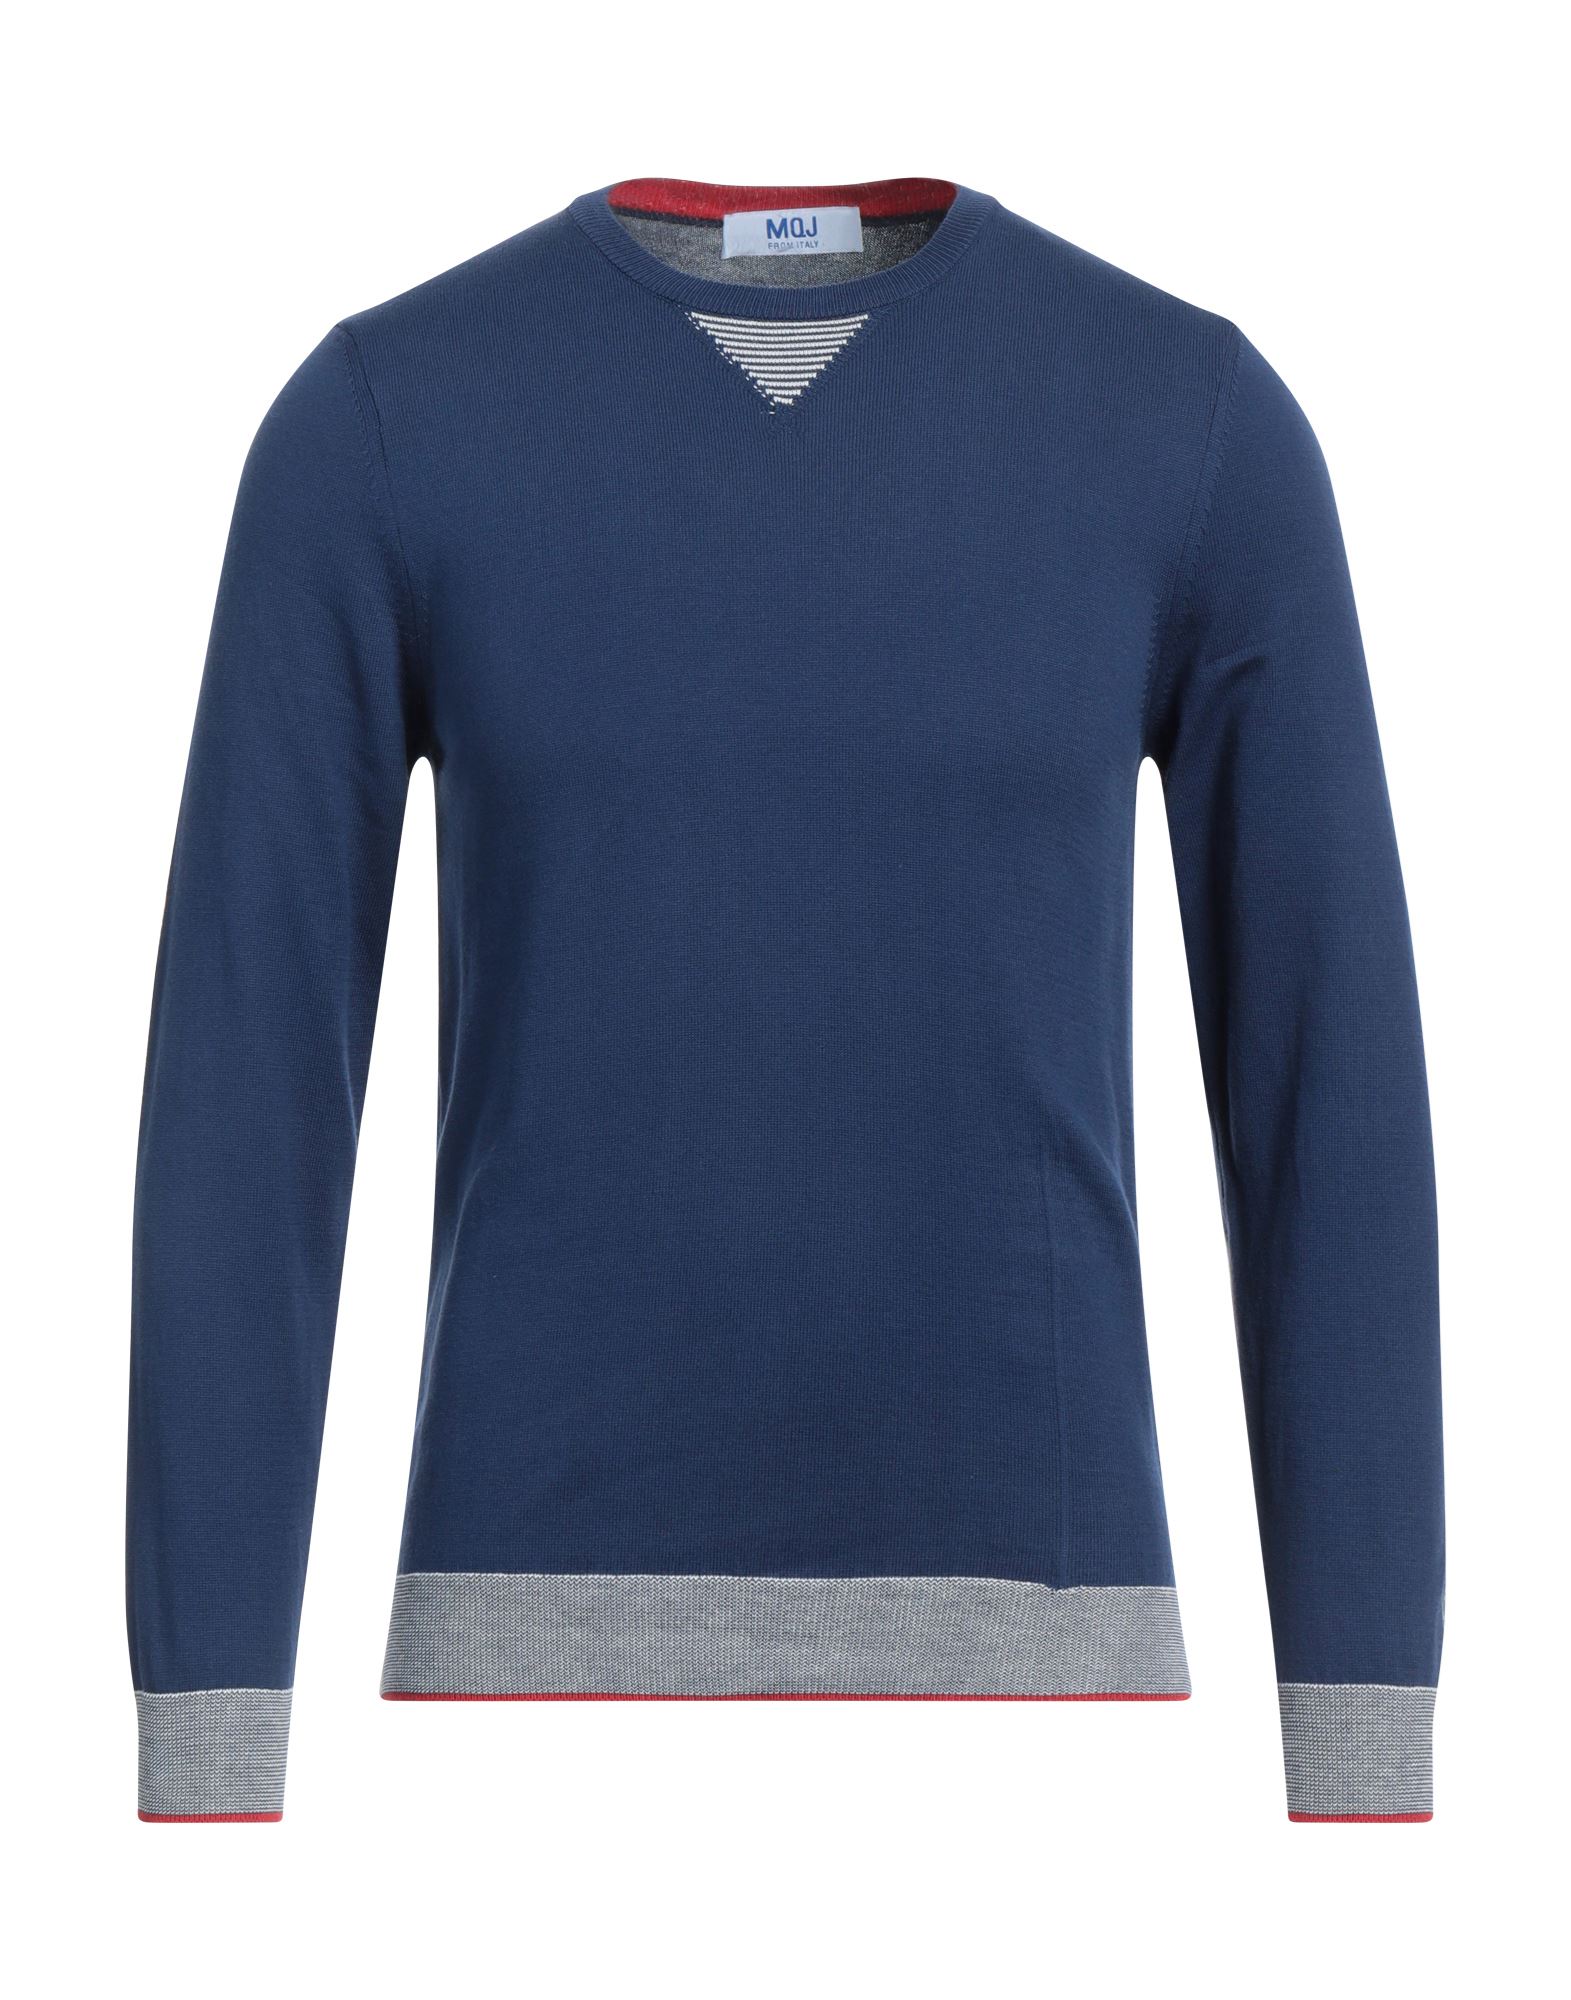 Mqj Sweaters In Navy Blue